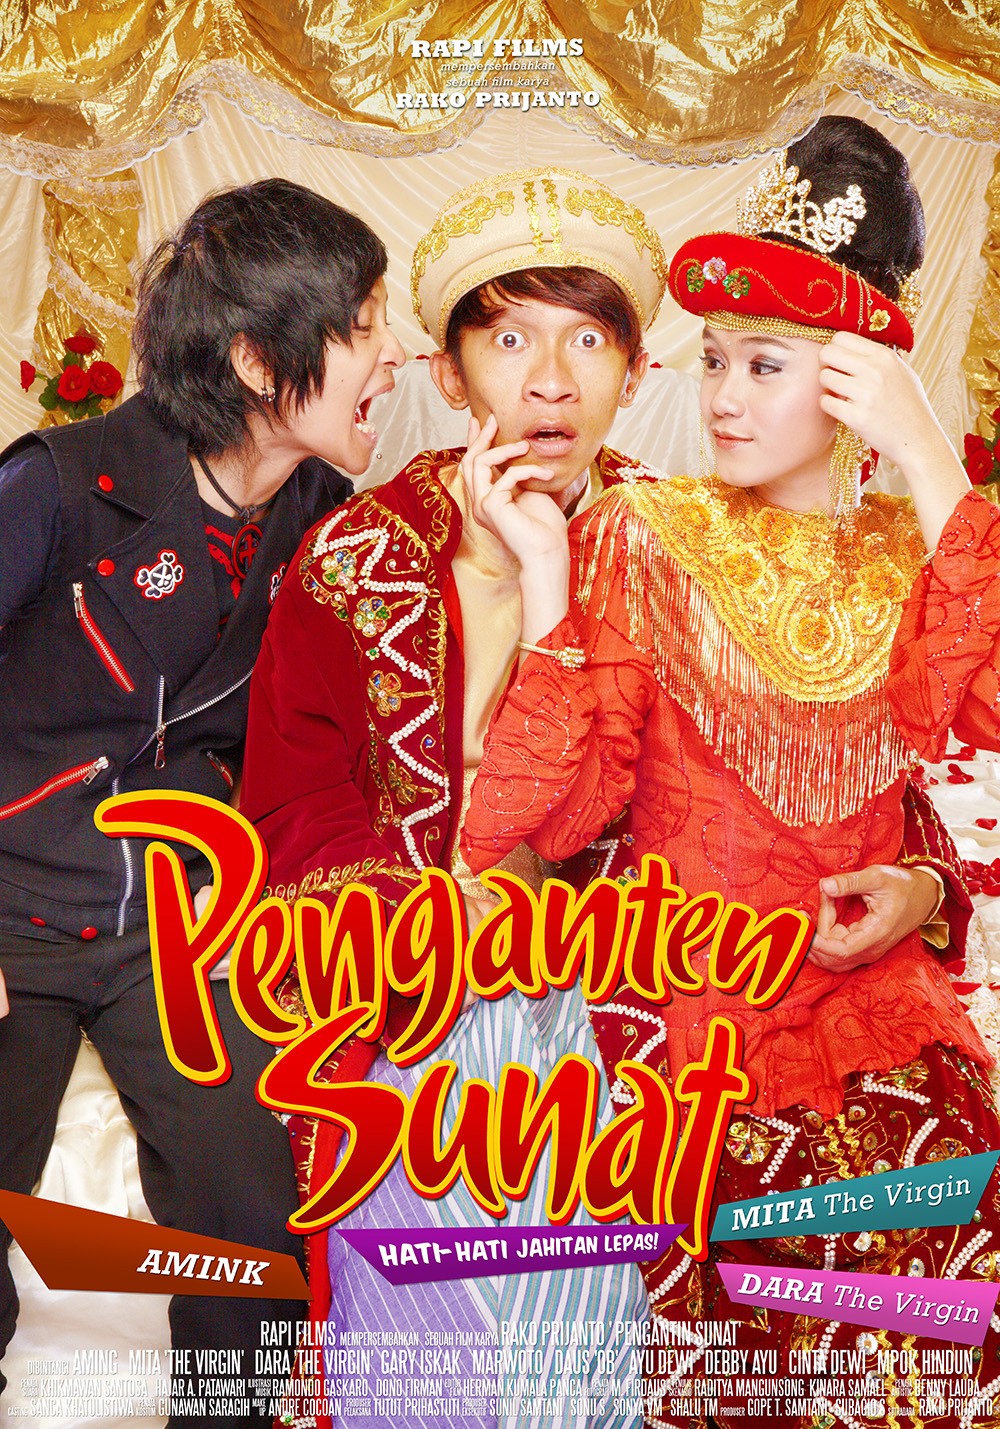 Extra Large Movie Poster Image for Penganten sunat (#2 of 3)